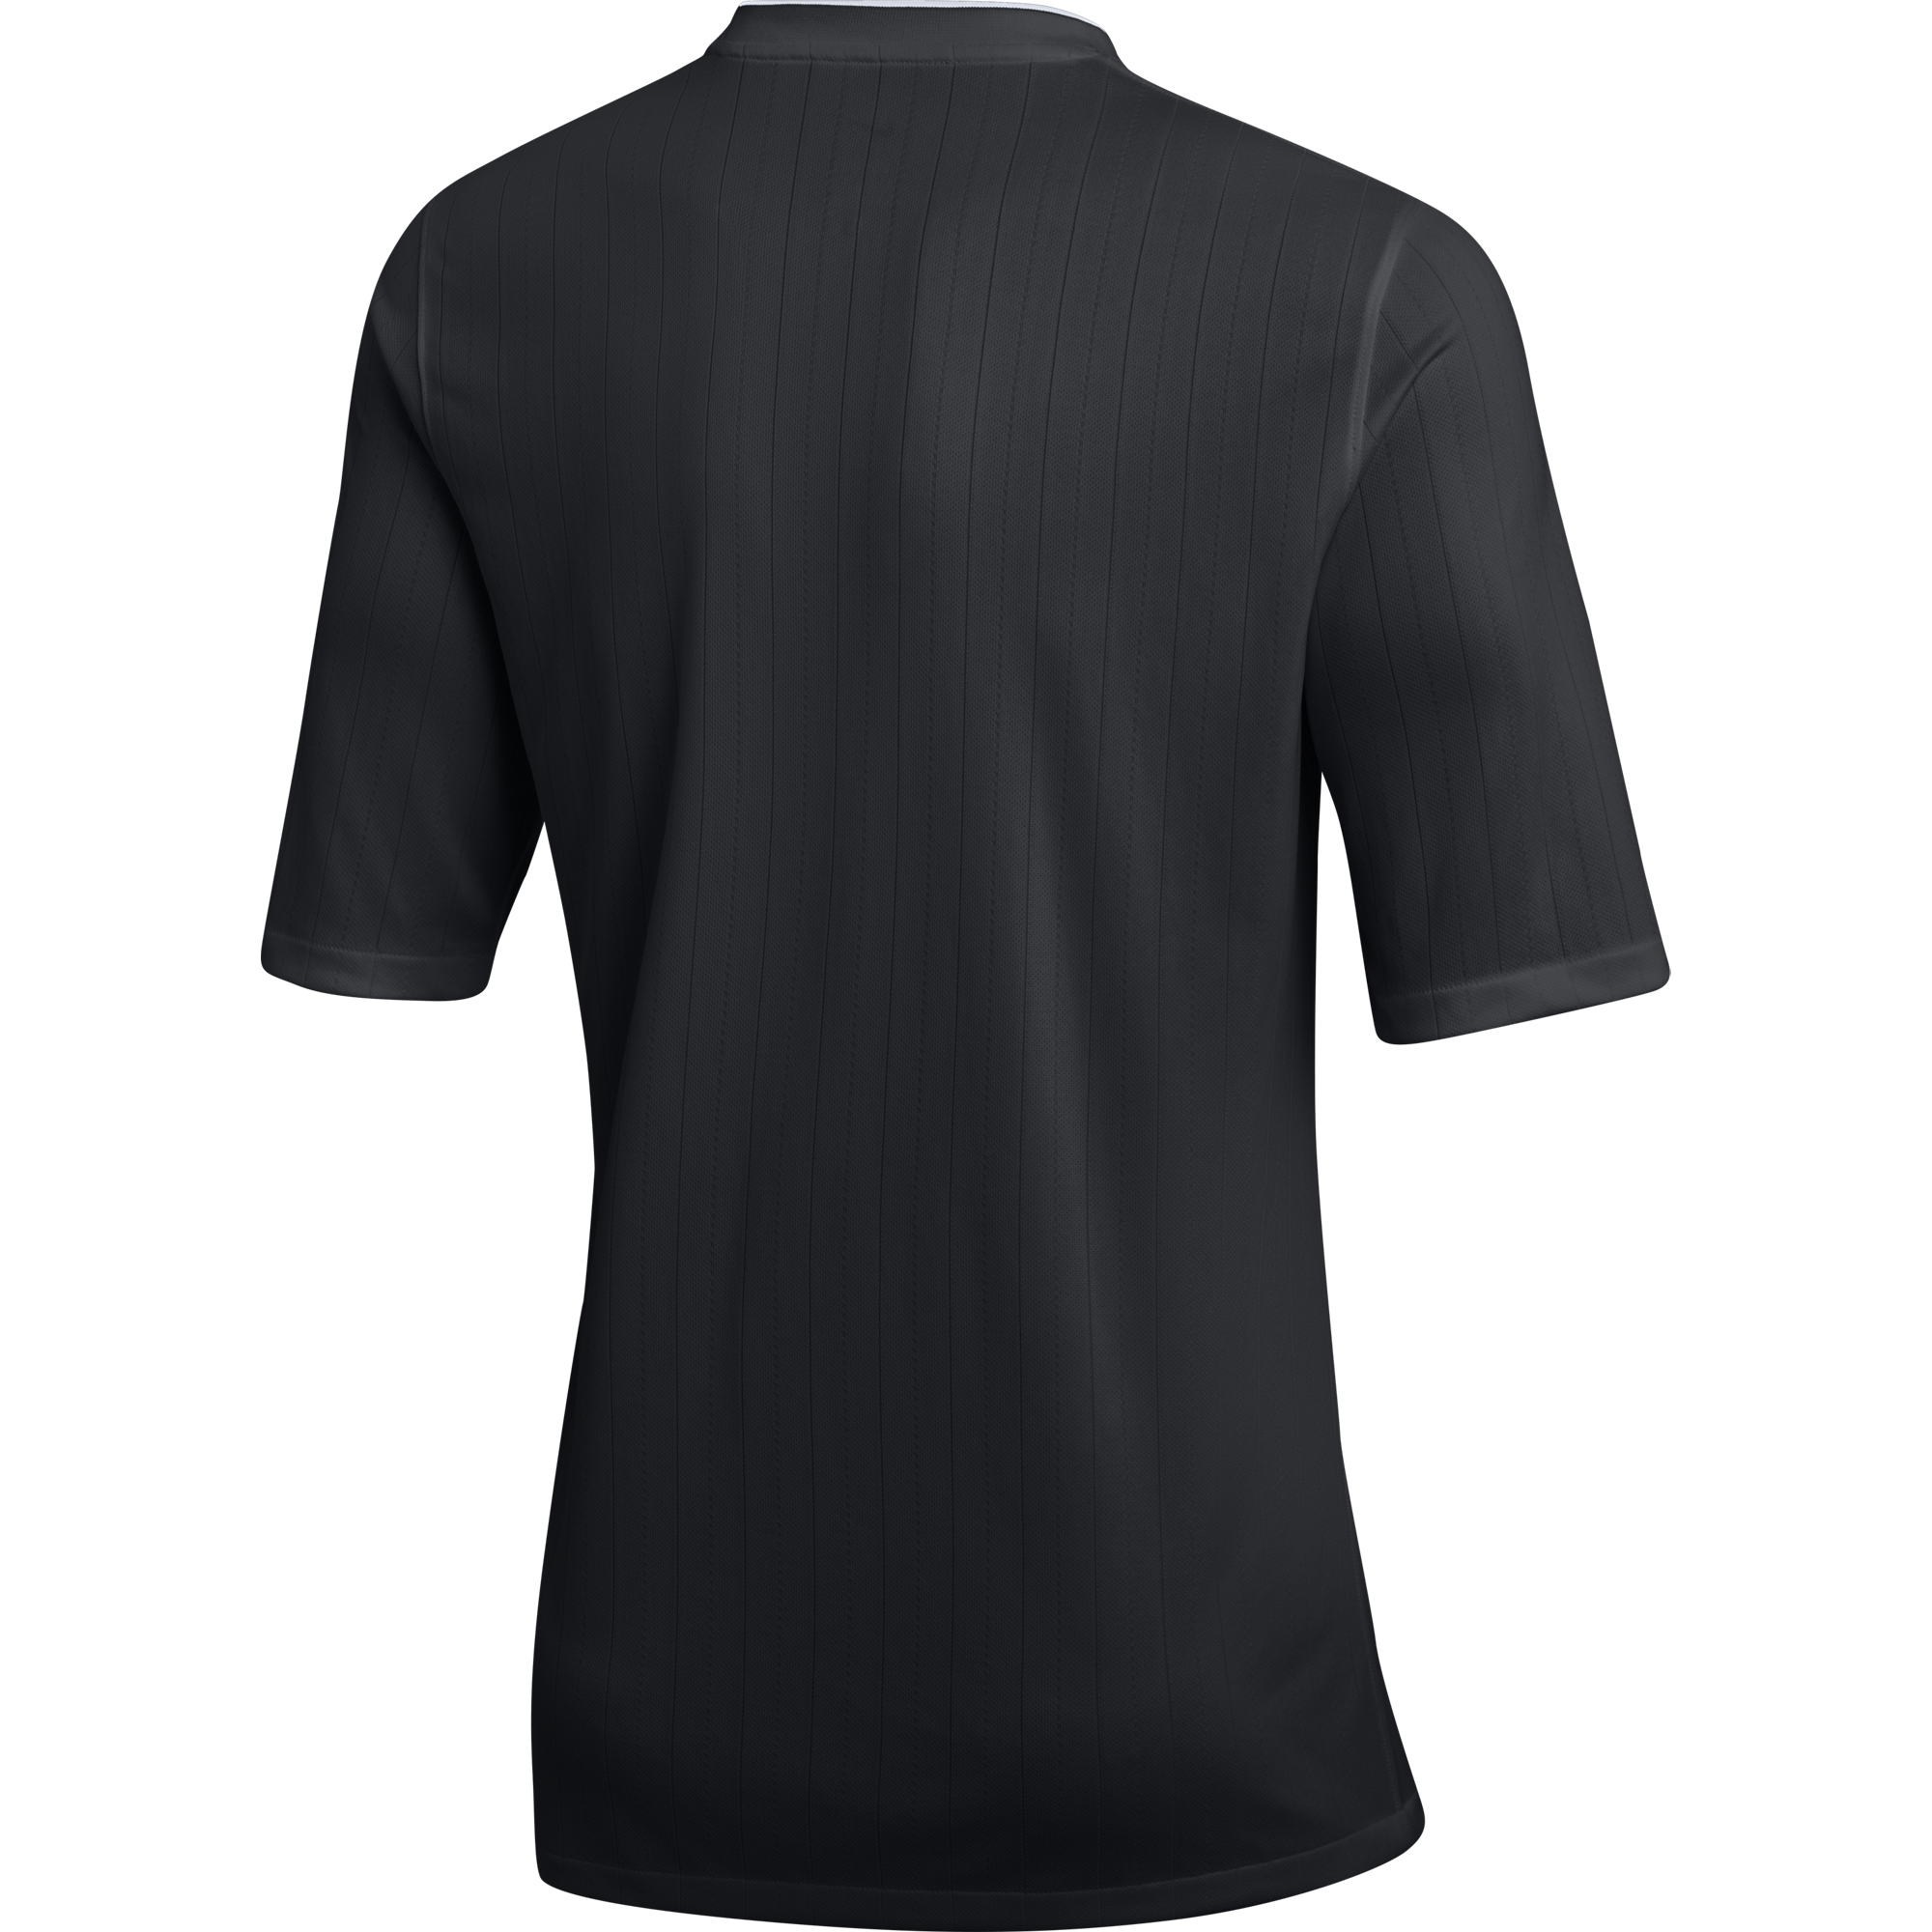 Nottingham FA - Referee II Top Short Sleeve